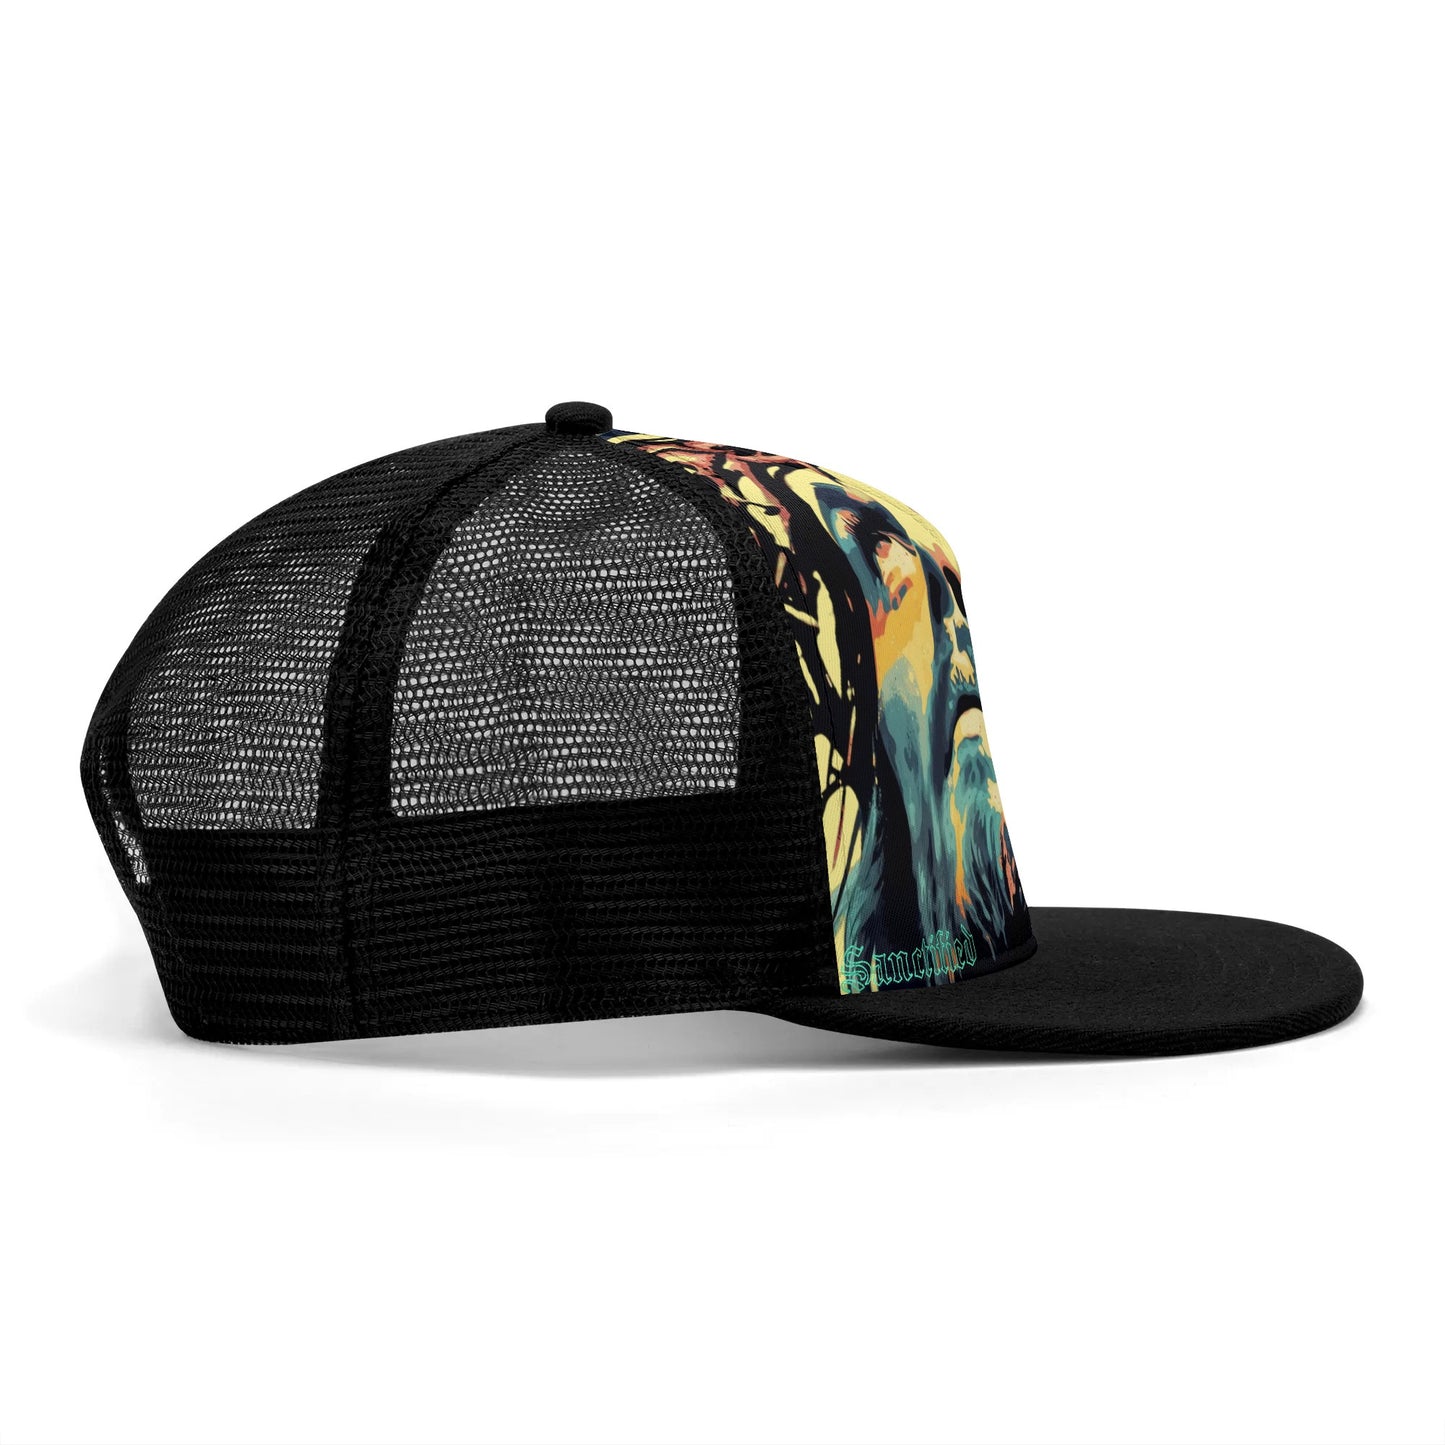 KING JESUS- Front Printing Adjustable Snapback Trucker Hat, Free Shipping